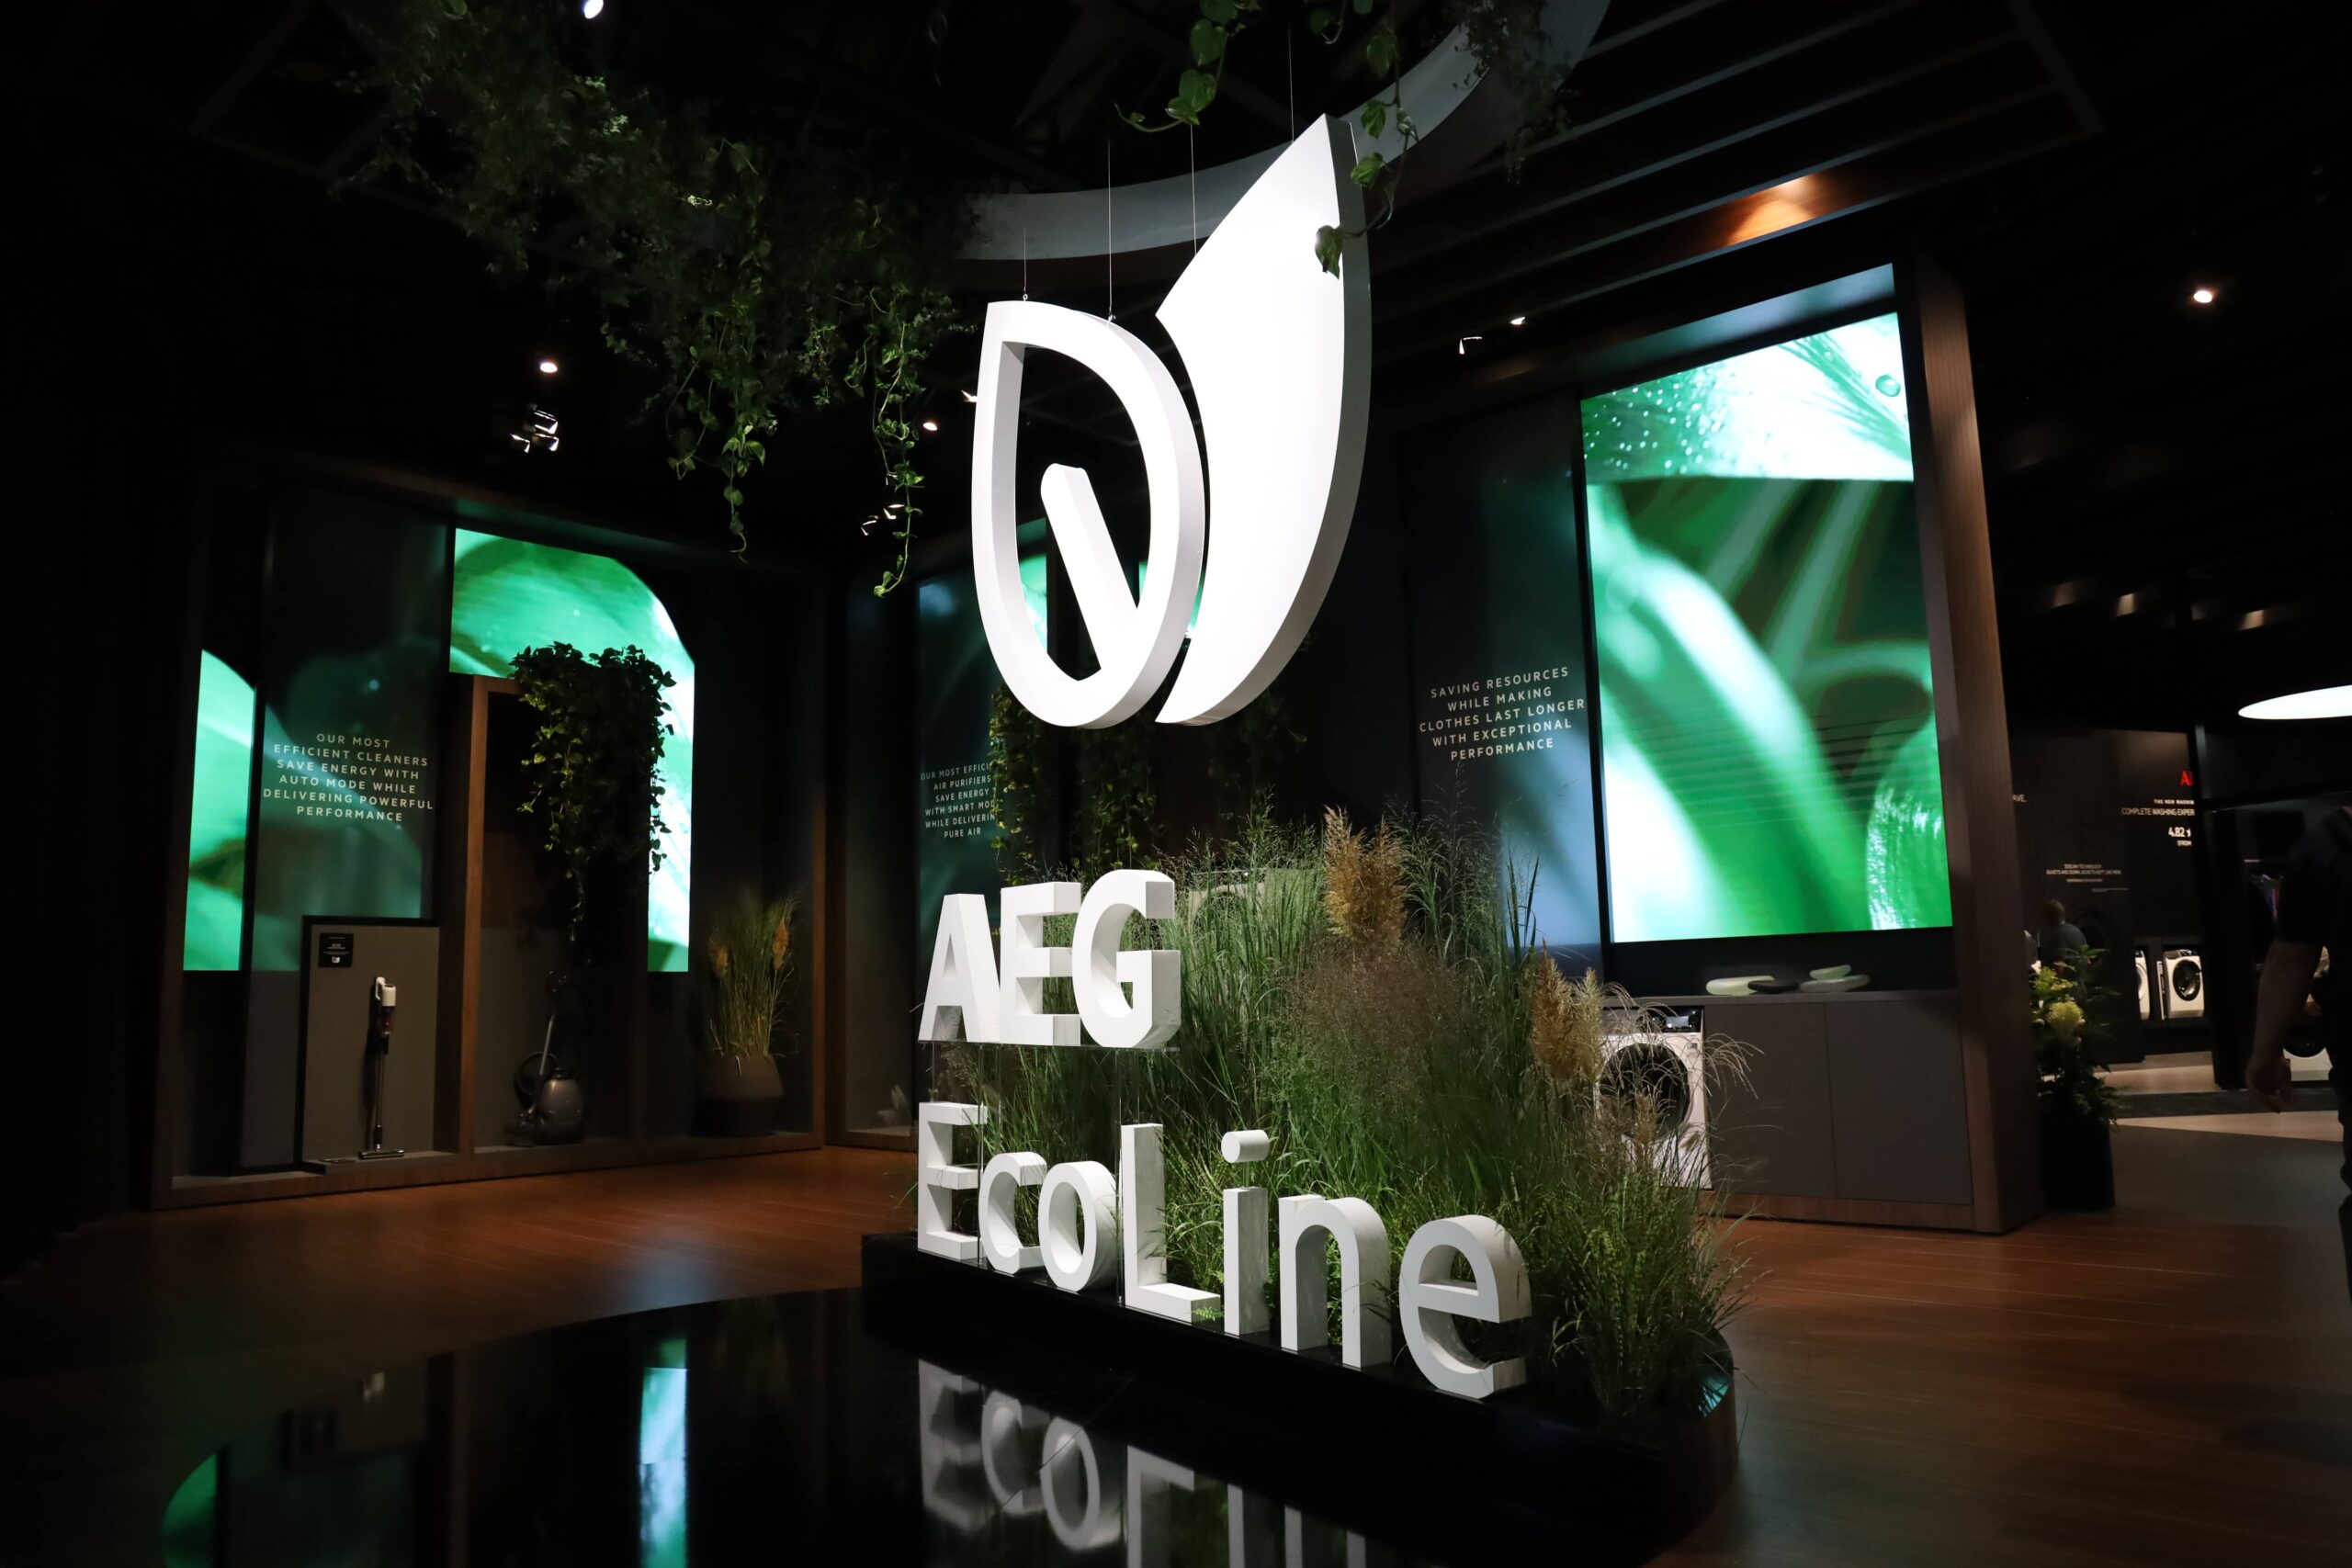 AEG Ecoline